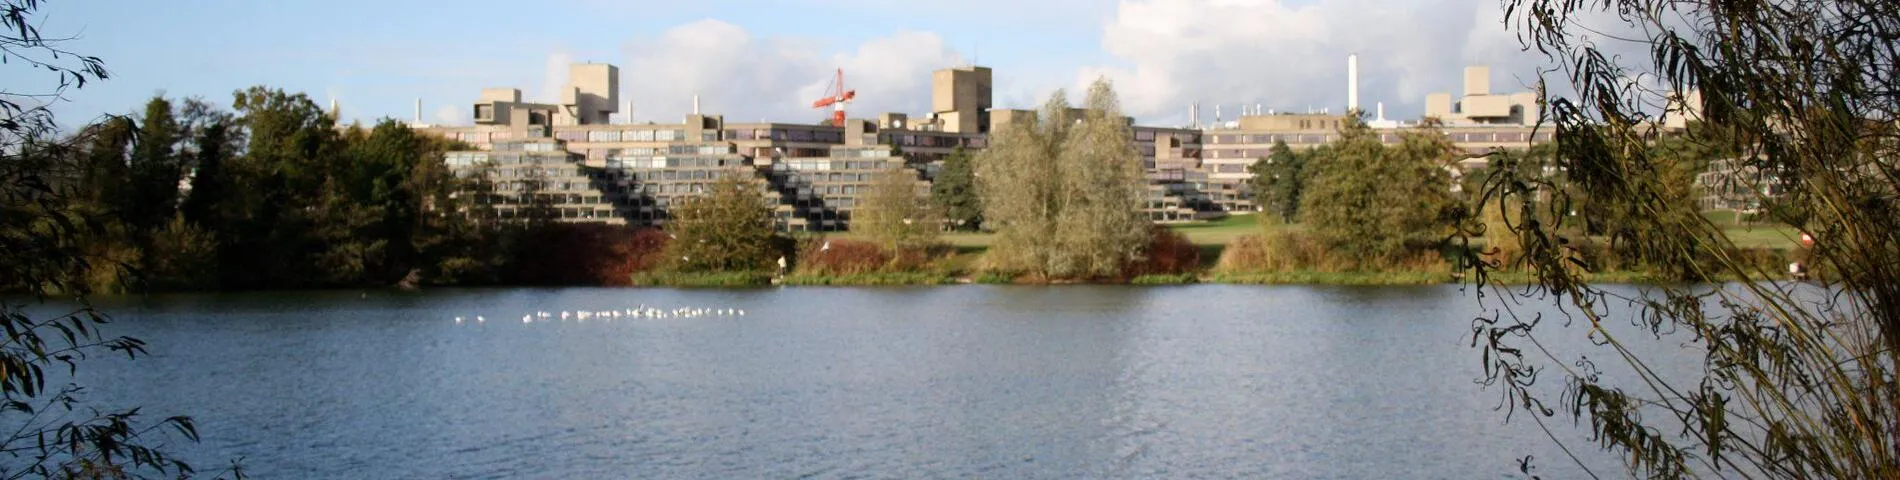 University of East Anglia зображення 1